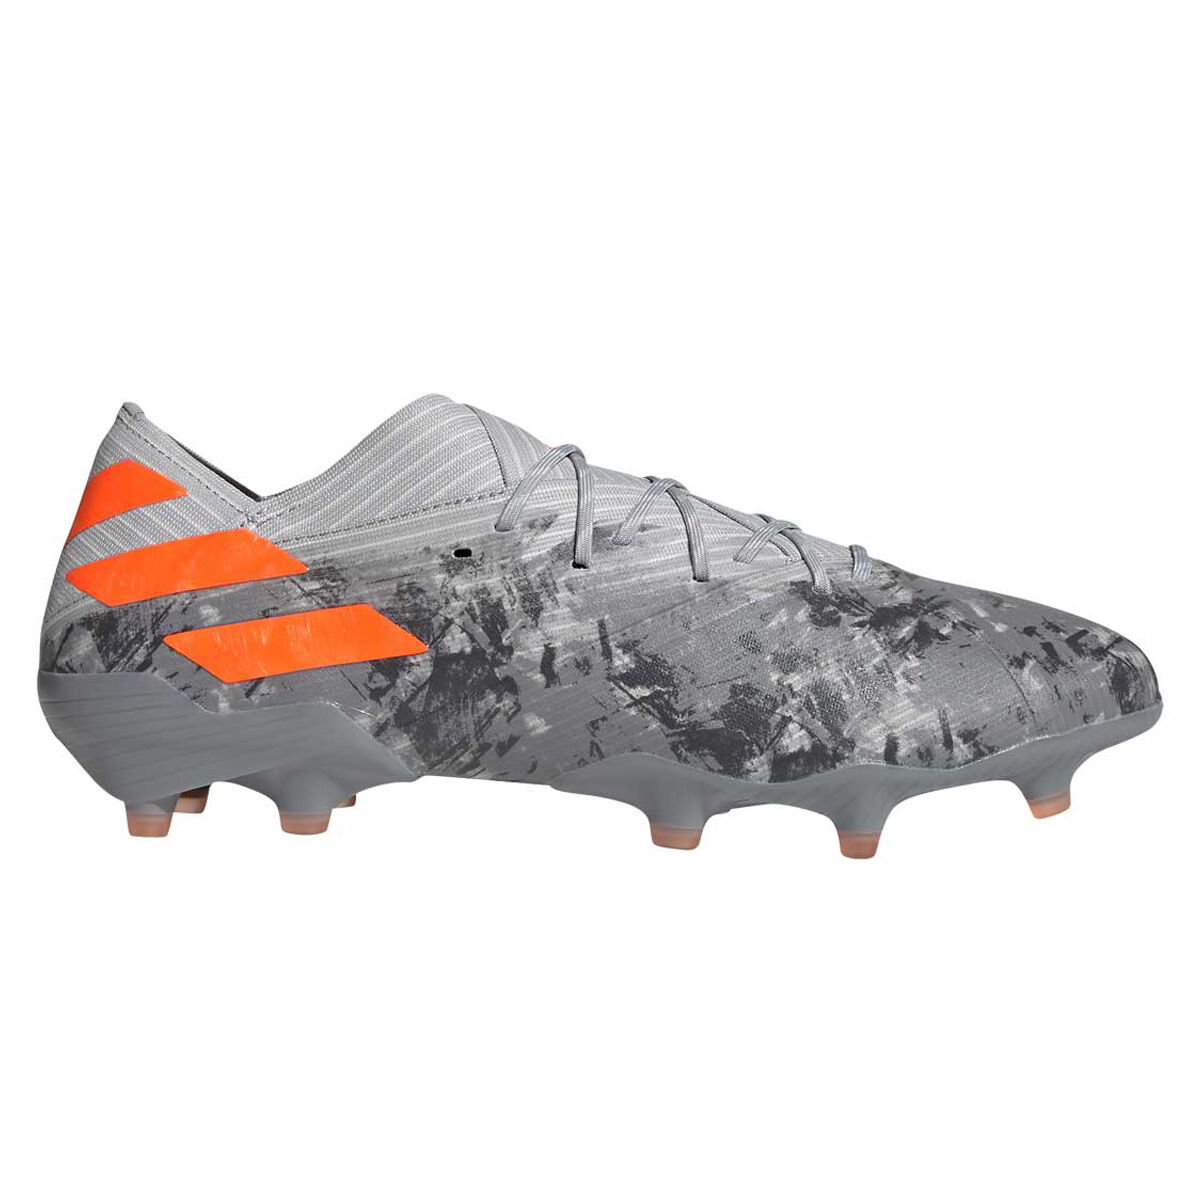 adidas orange football boots